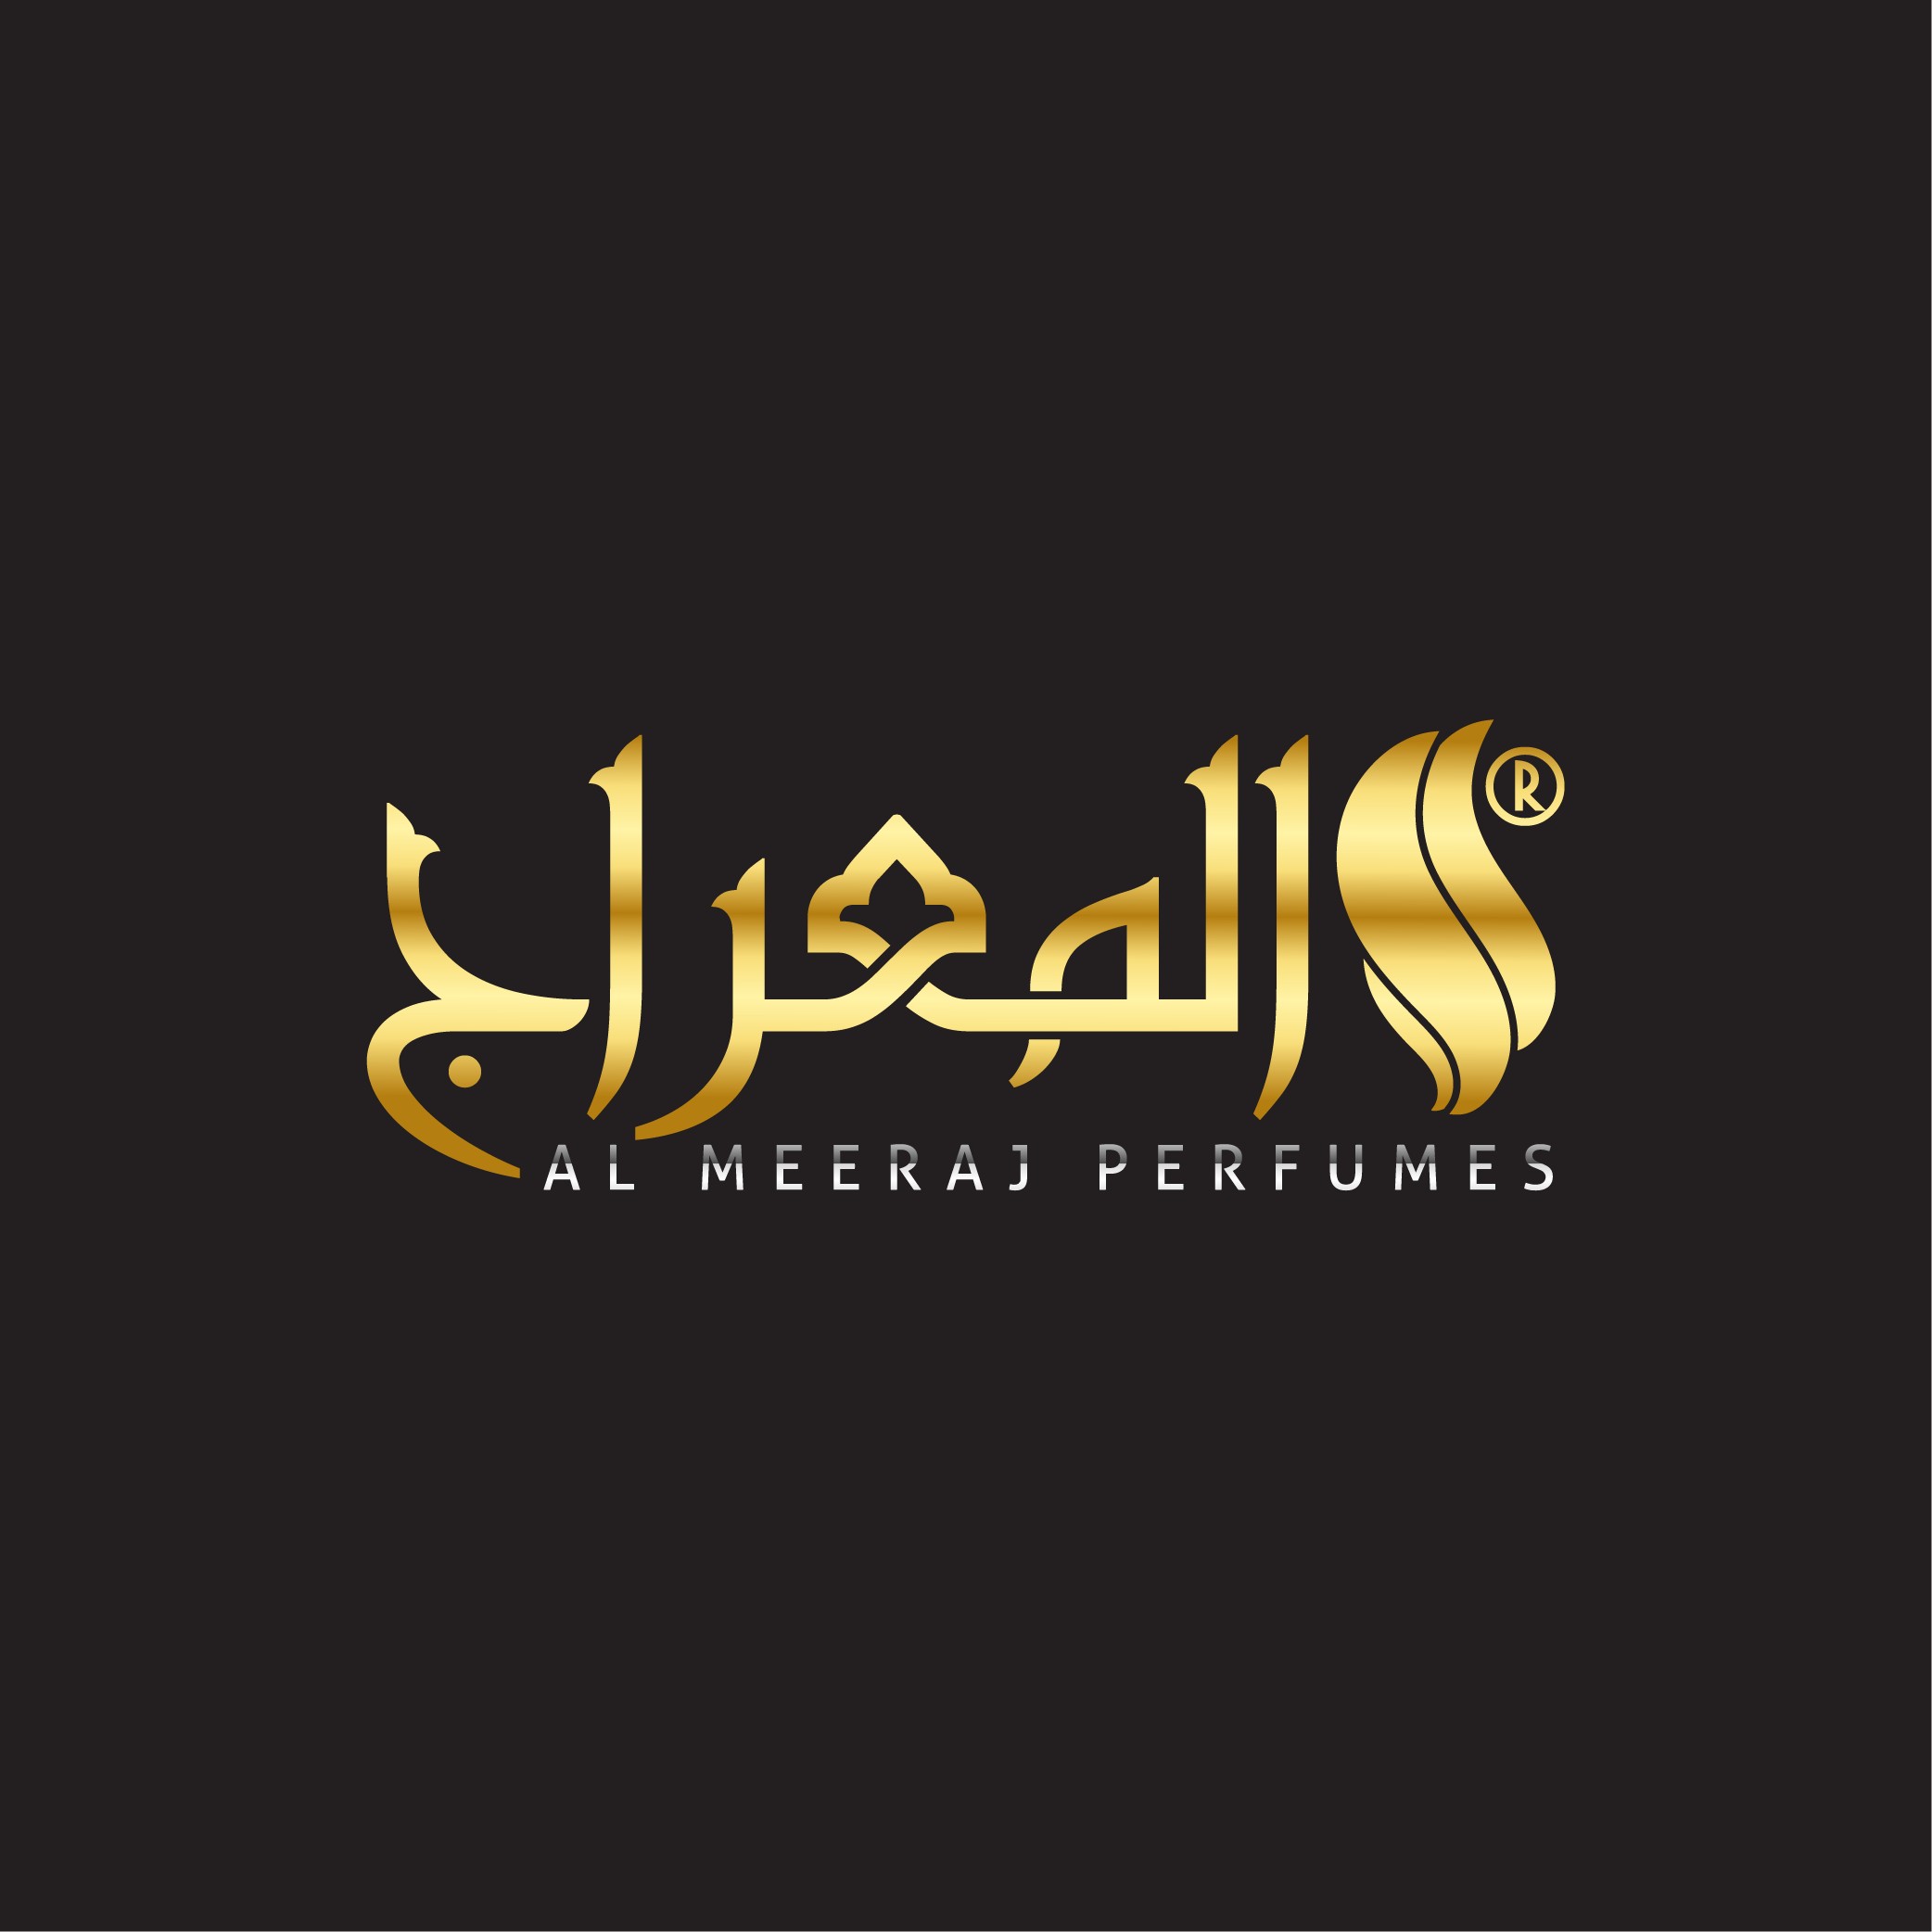 Al Meeraj perfumes